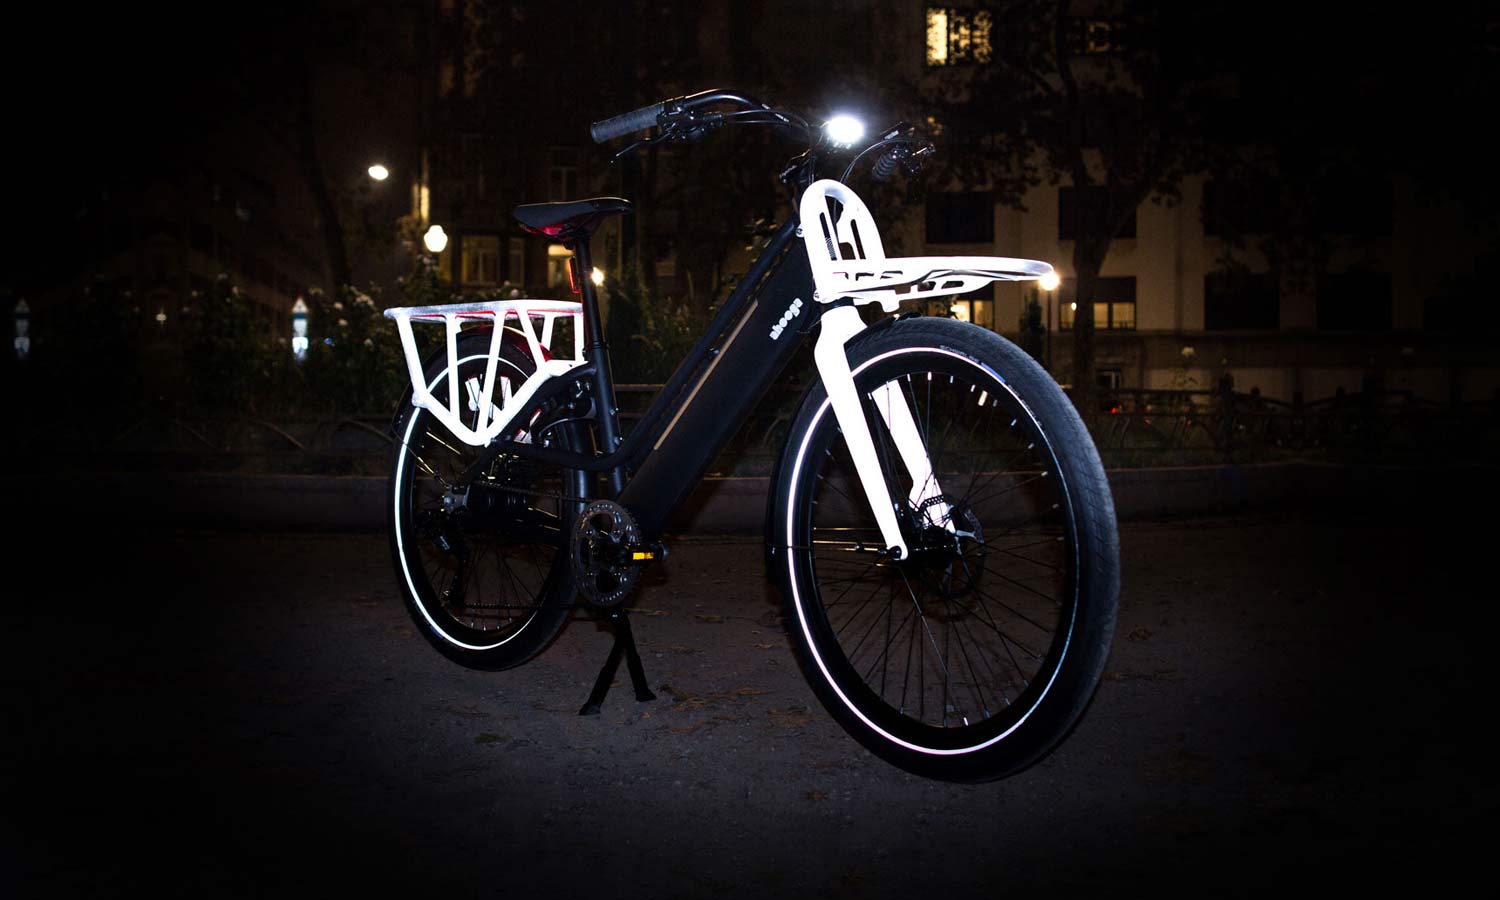 Ahooga Modular Bike, lightweight compact urban commuter bike or e-bike, limited edition reflective Low Step step-thru city bike